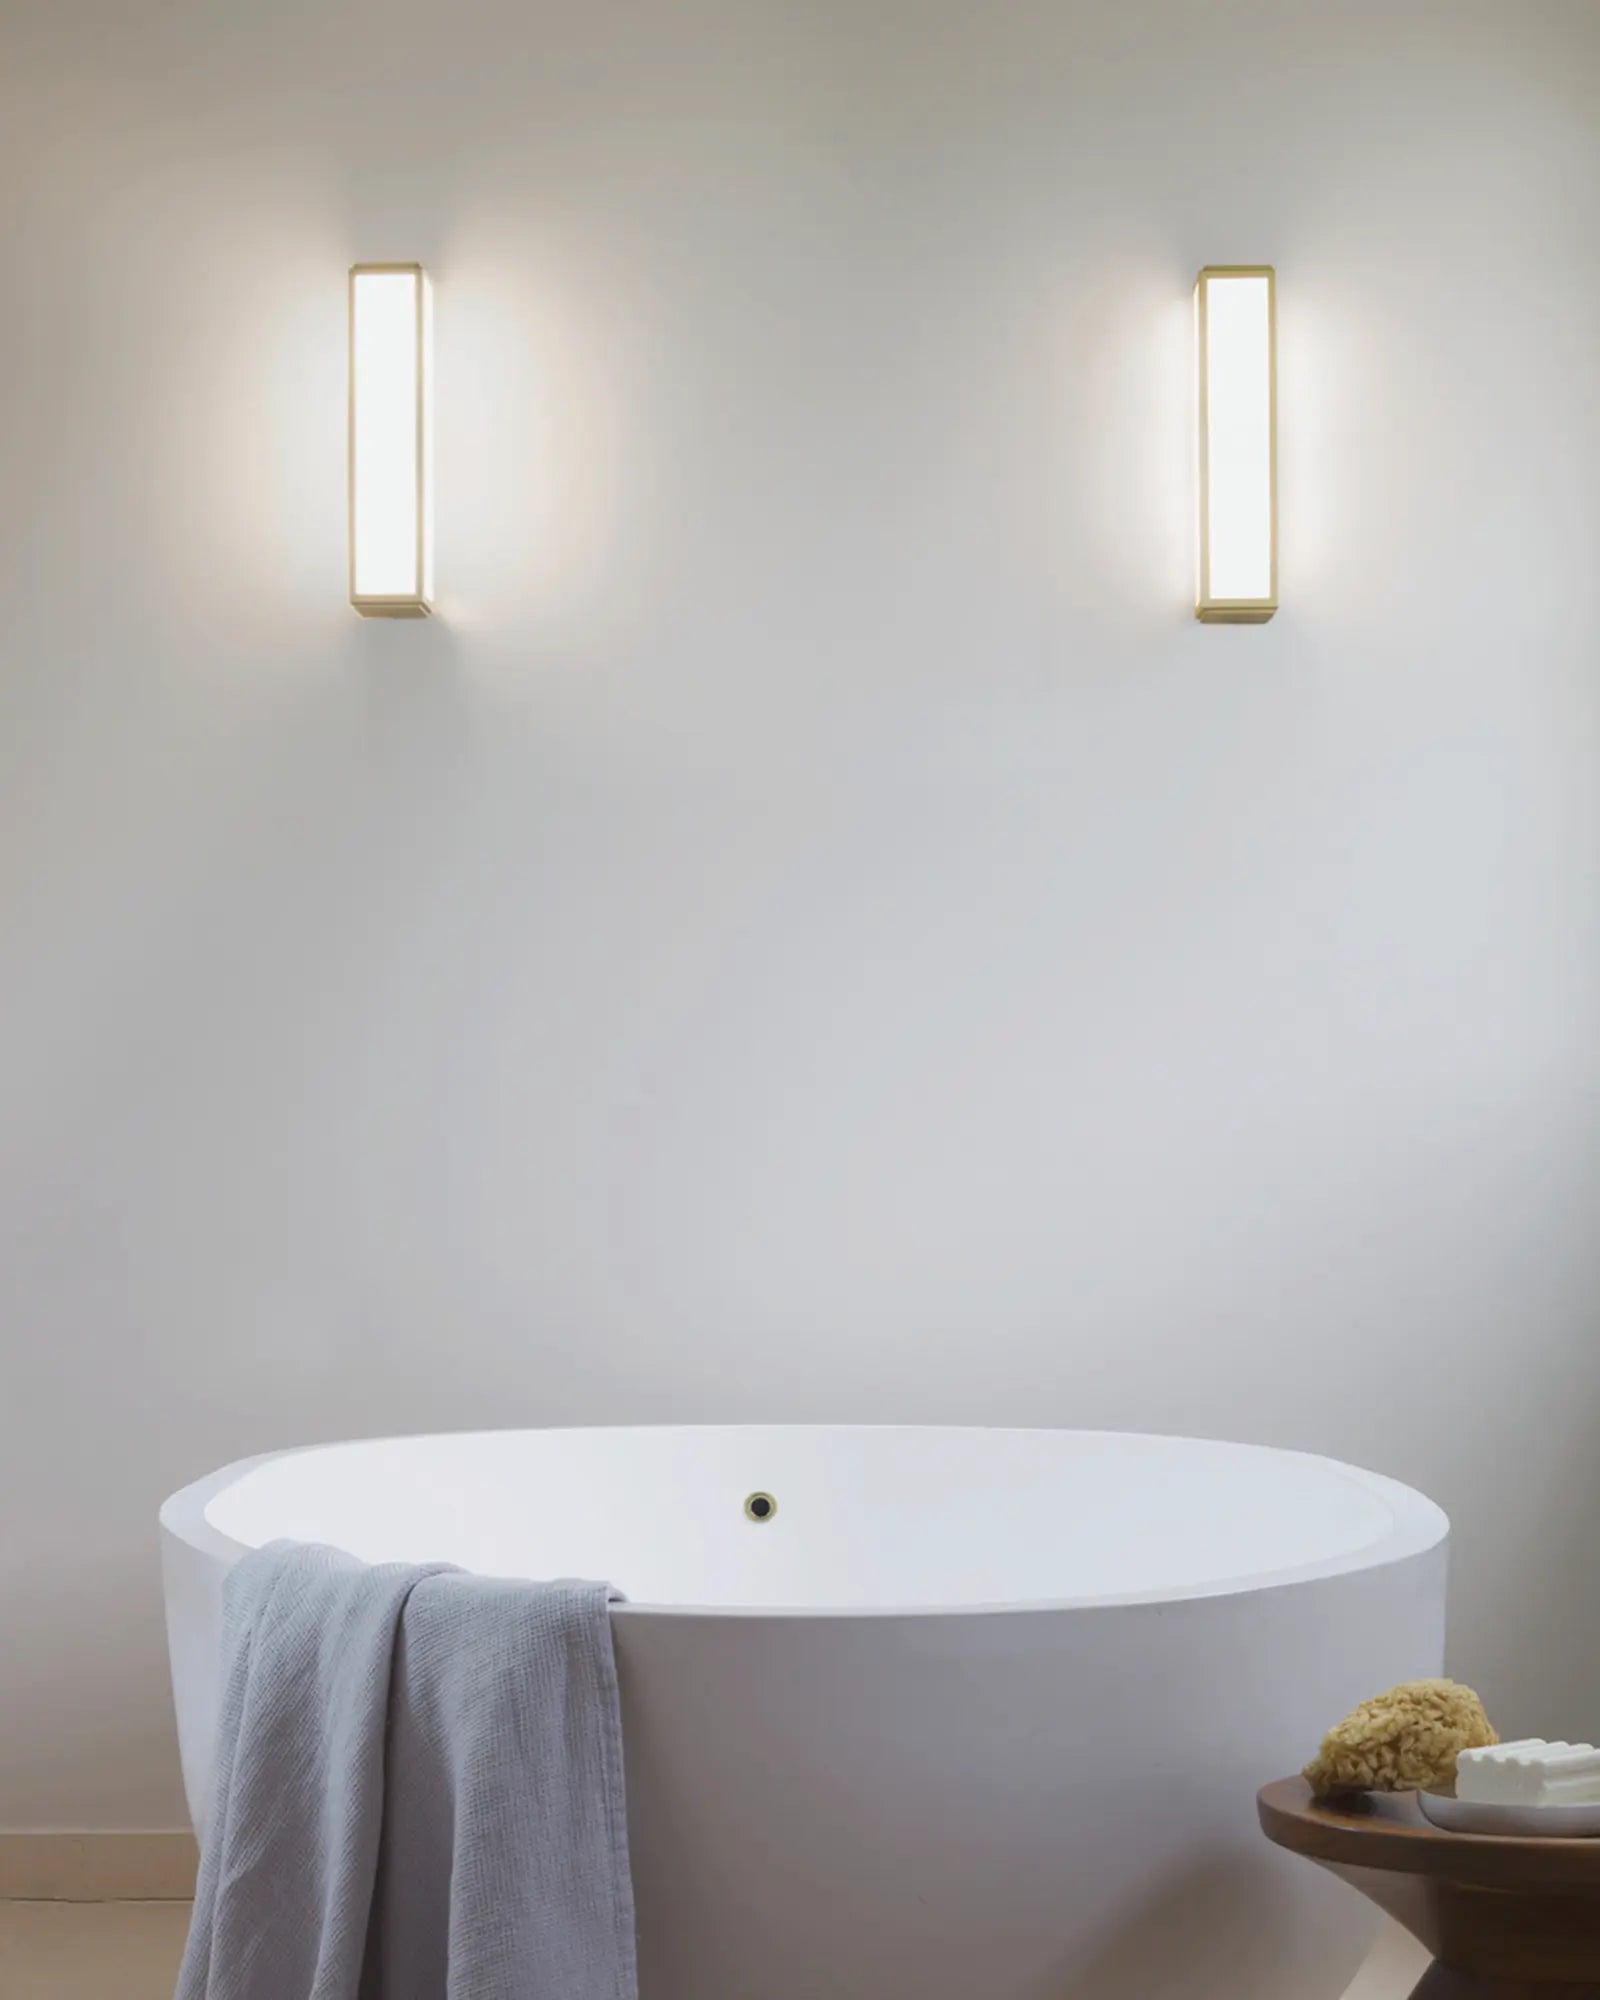 Mashiko metal and glass contemporary bathroom wall light above a bath tub